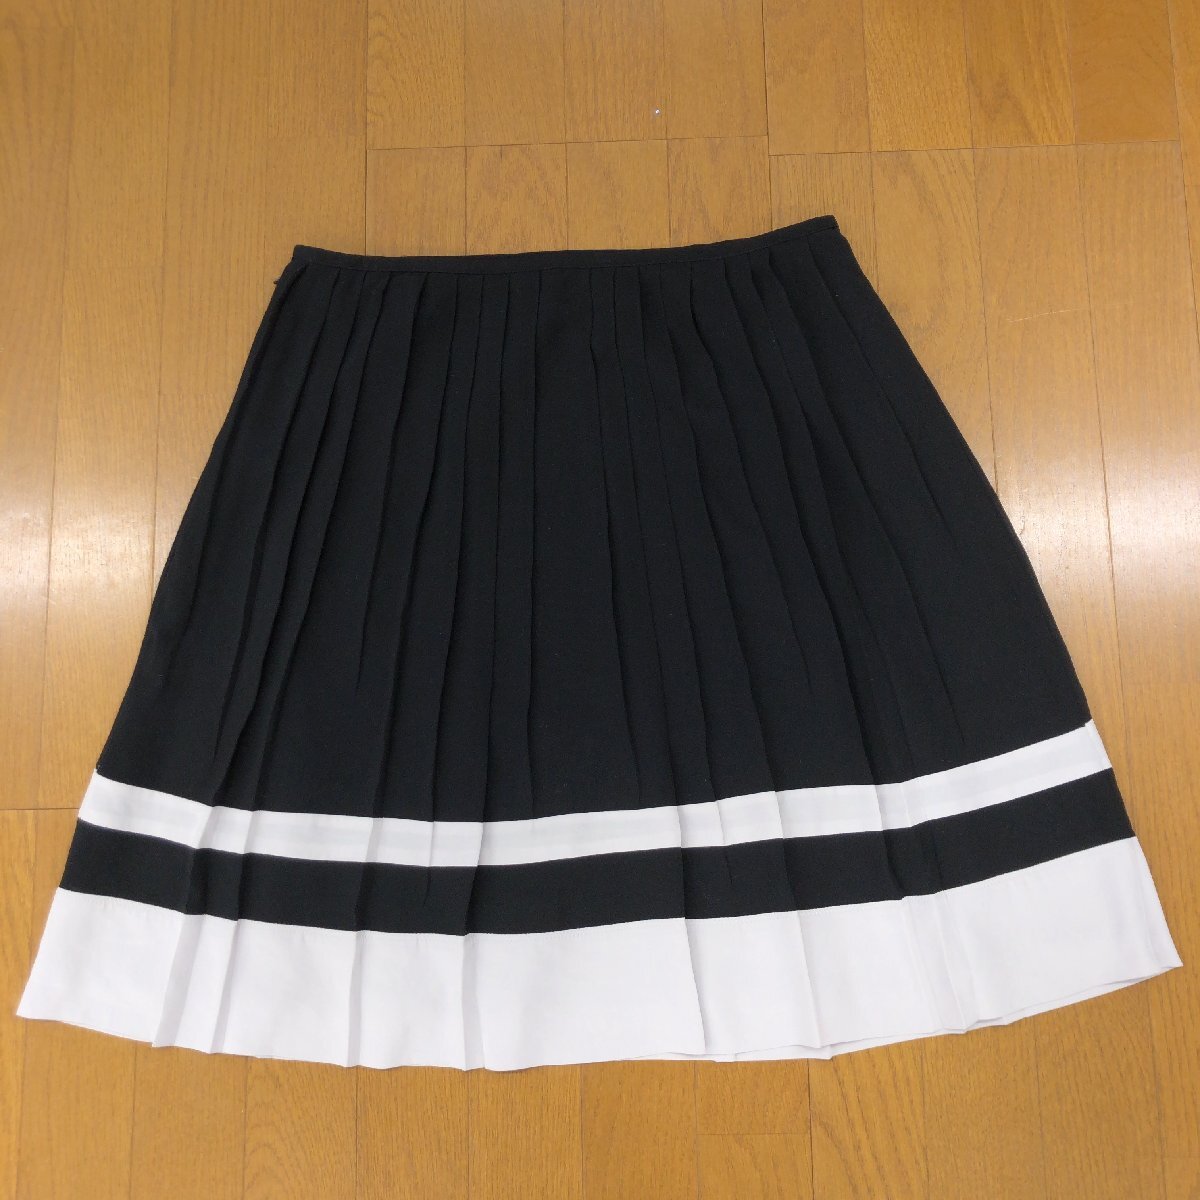 KUMIKYOKUk Miki .k Layered pleated skirt 6(2XL) w80 black black midi height 3L easy large chiffon skirt for women Kumikyoku 